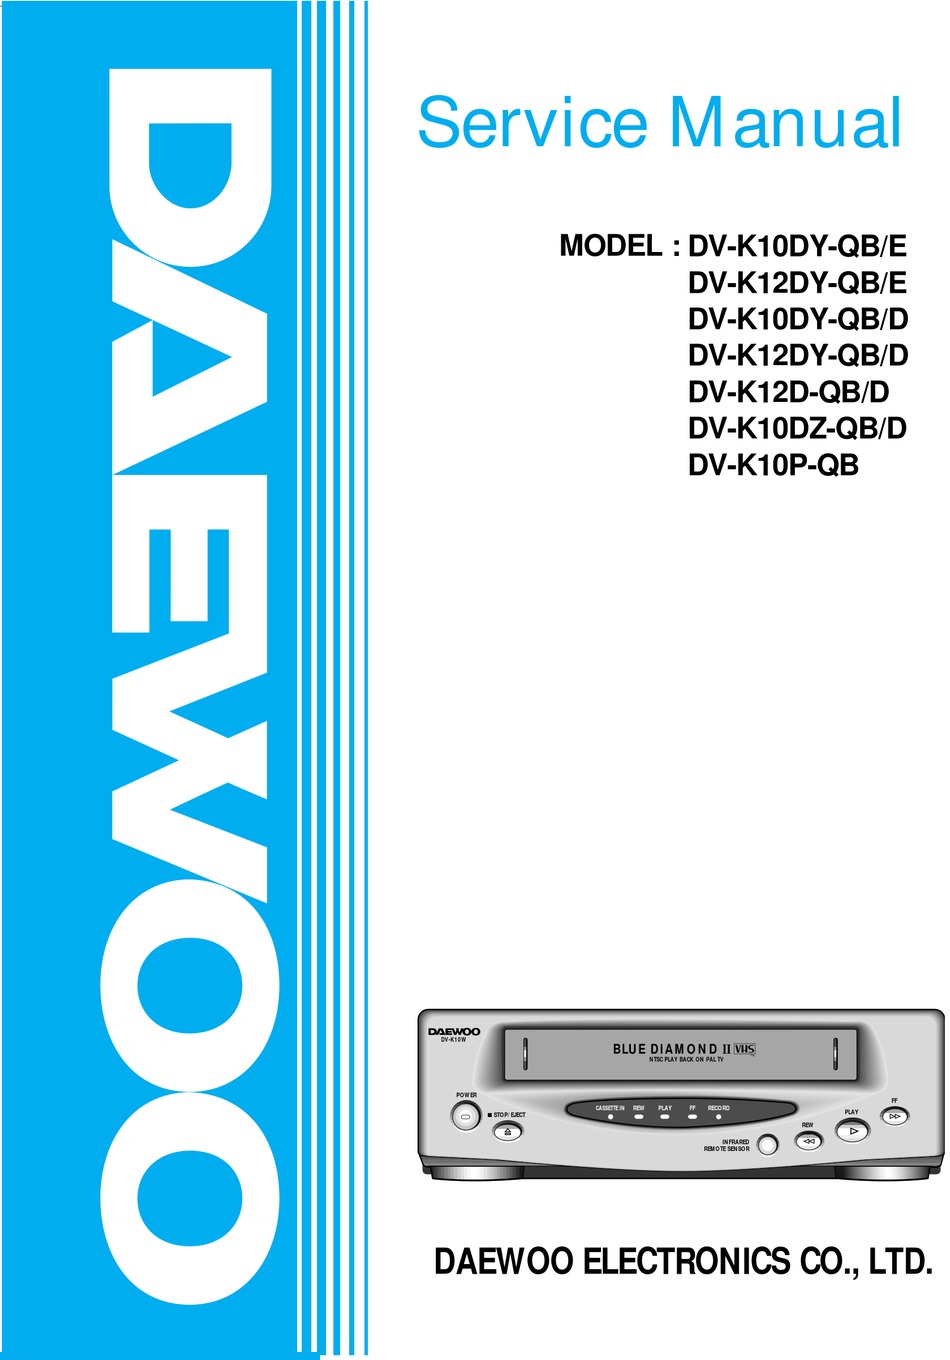 DAEWOO DV-K10DY-QB SERVICE MANUAL Pdf Download | ManualsLib